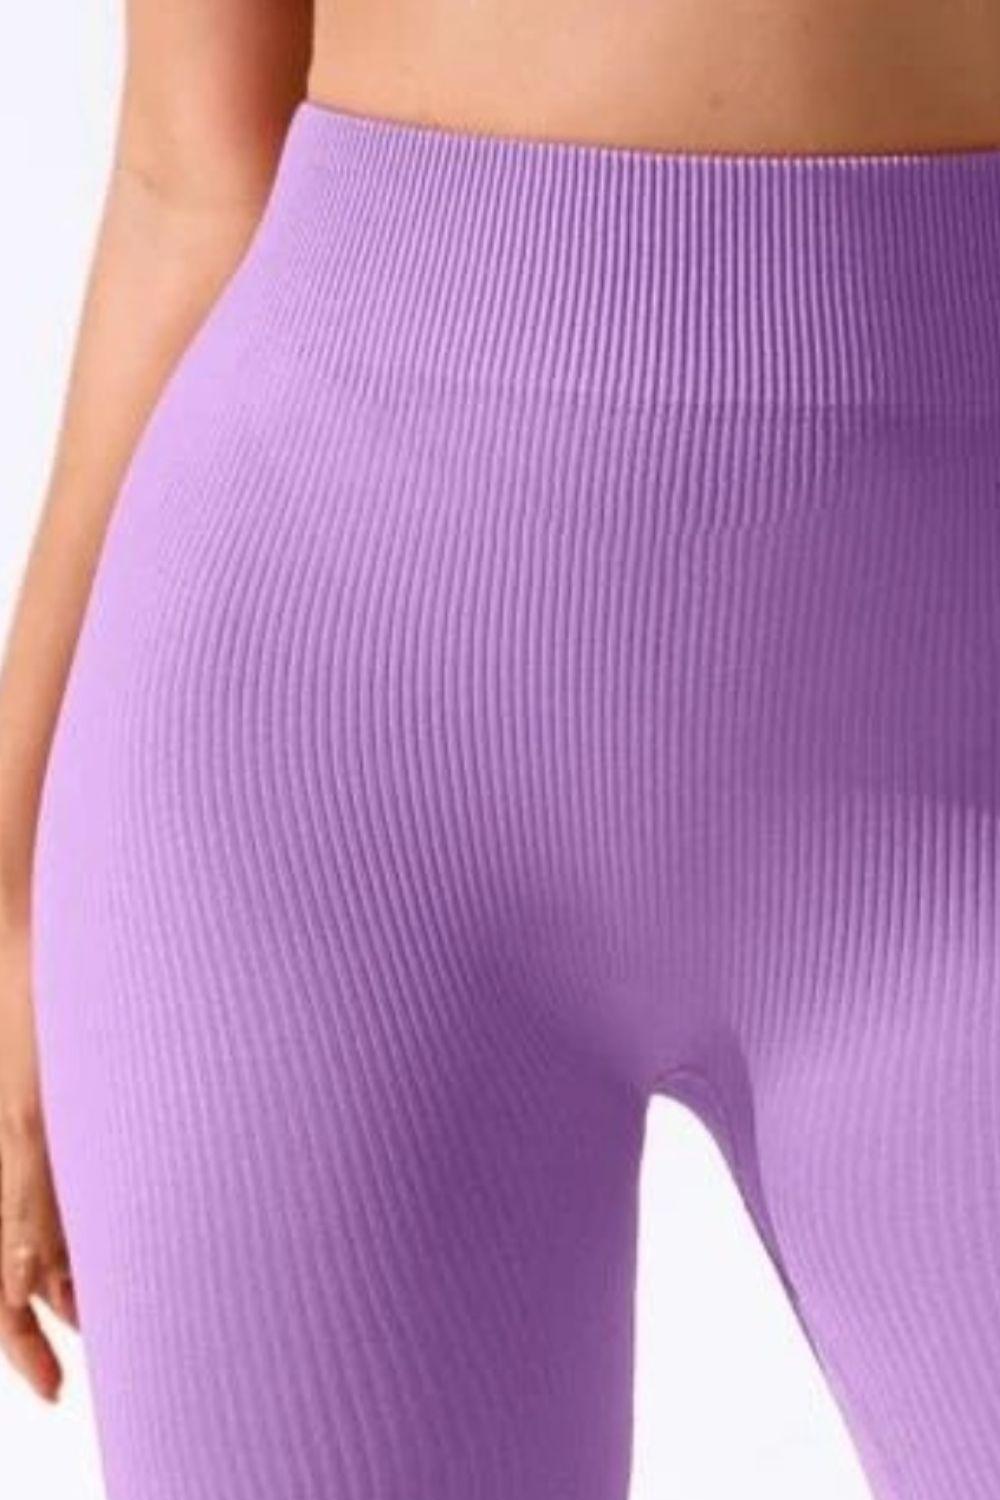 a close up of a woman's butt wearing a purple sports bra